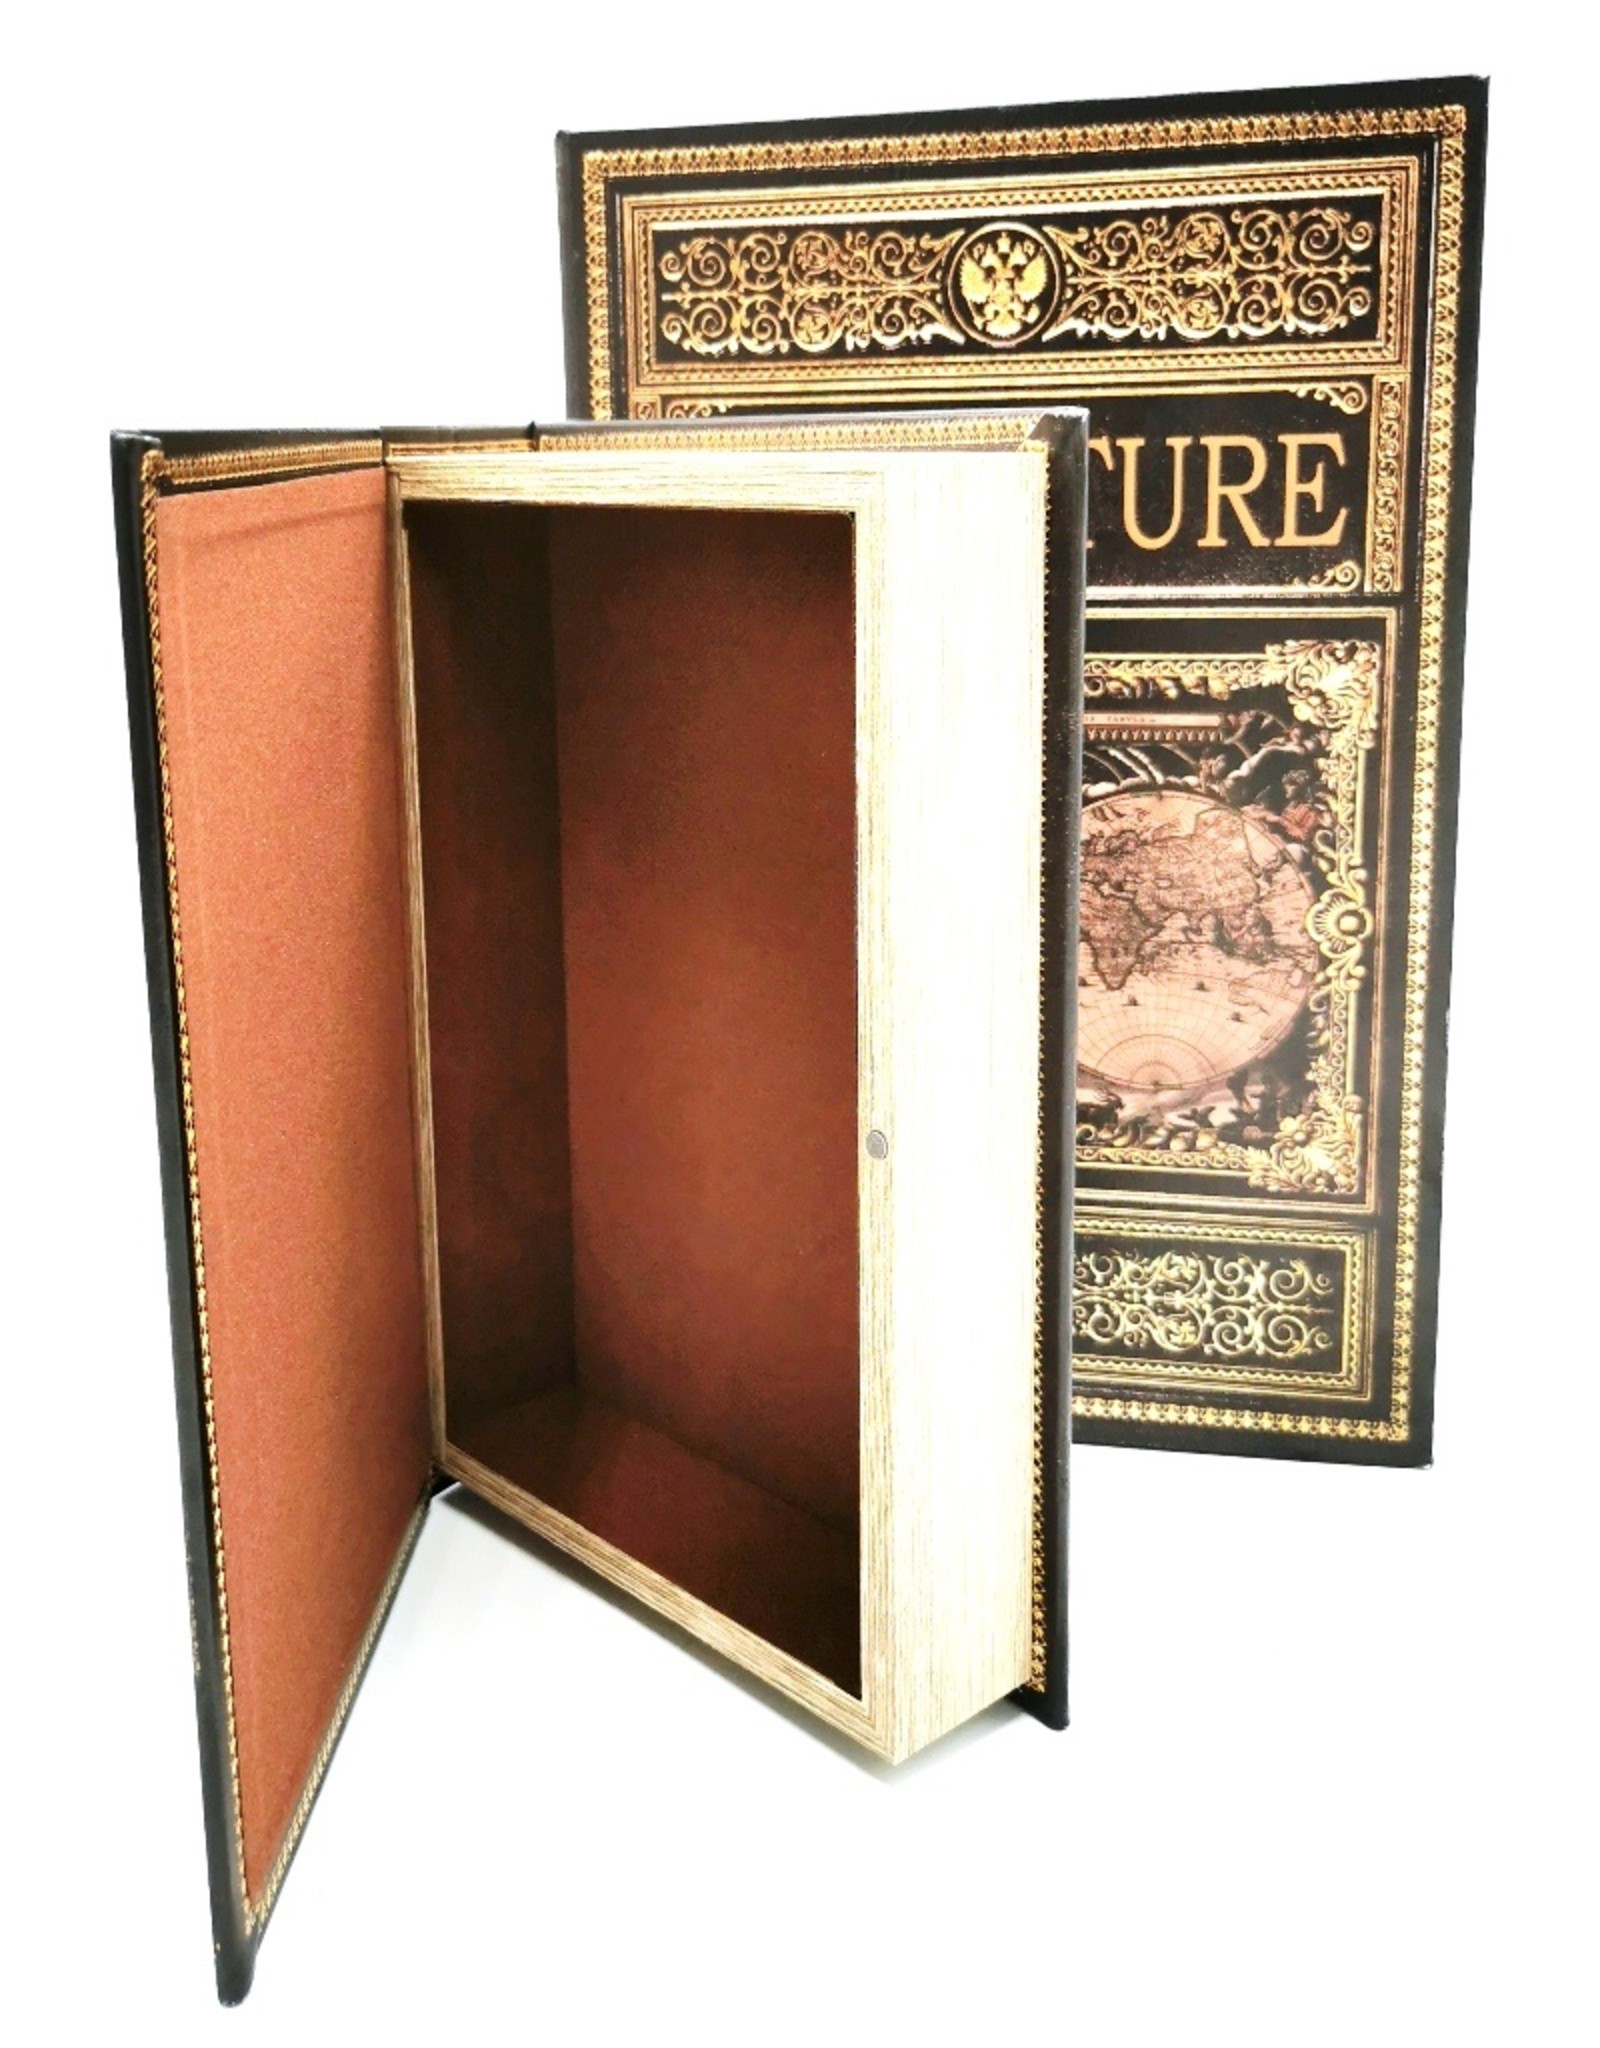 Trukado Giftware & Lifestyle - Storage box Book Adventure - Set of 2